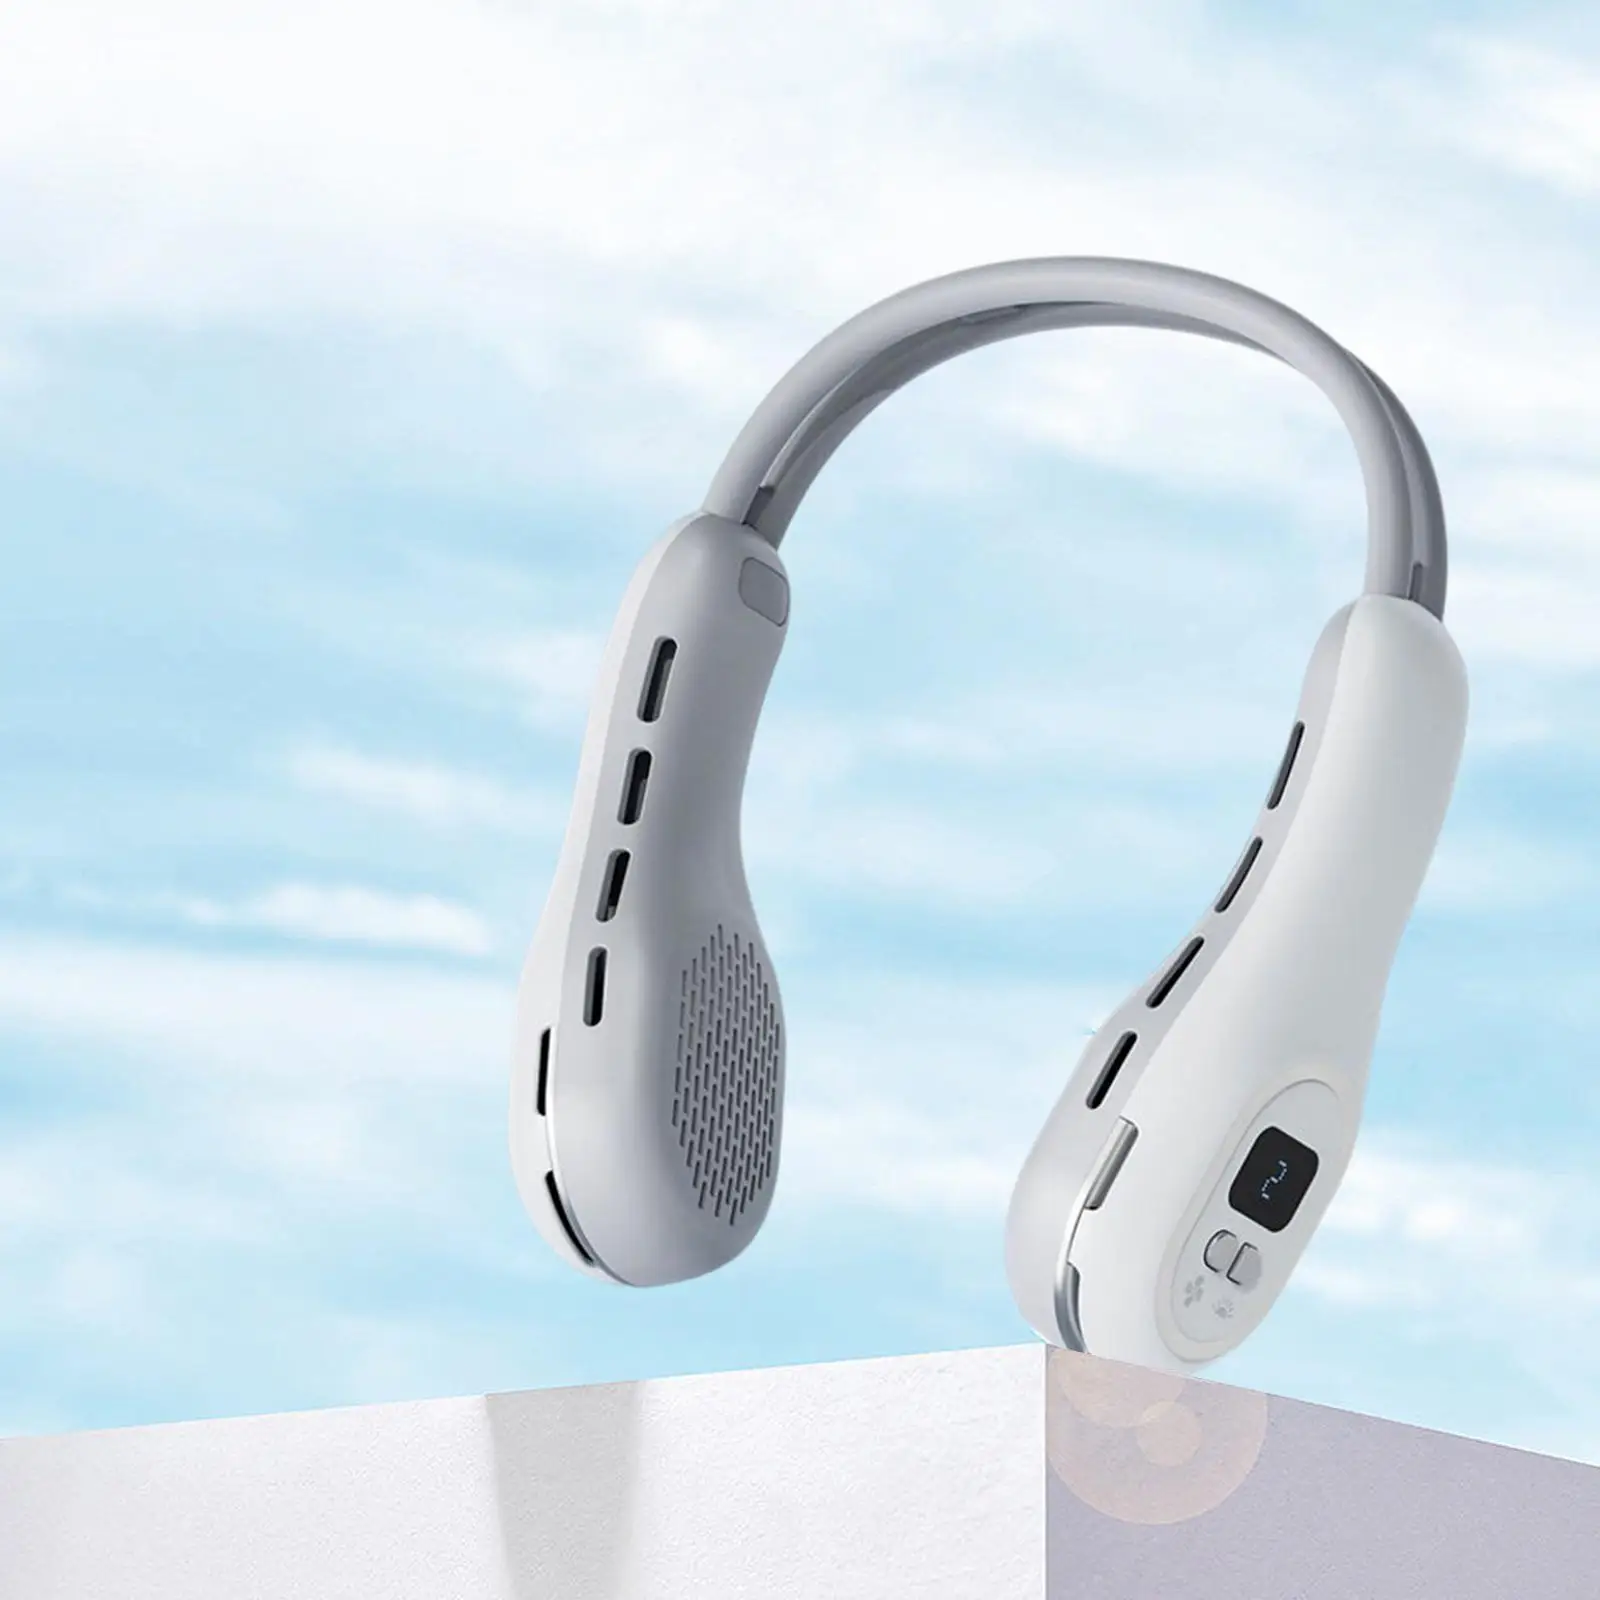 Portable Neck Fan Free Adjustment Quiet headphone with 3 Speeds wind Speeds Bladeless Fan Wearable Personal Neck Fan for Travel